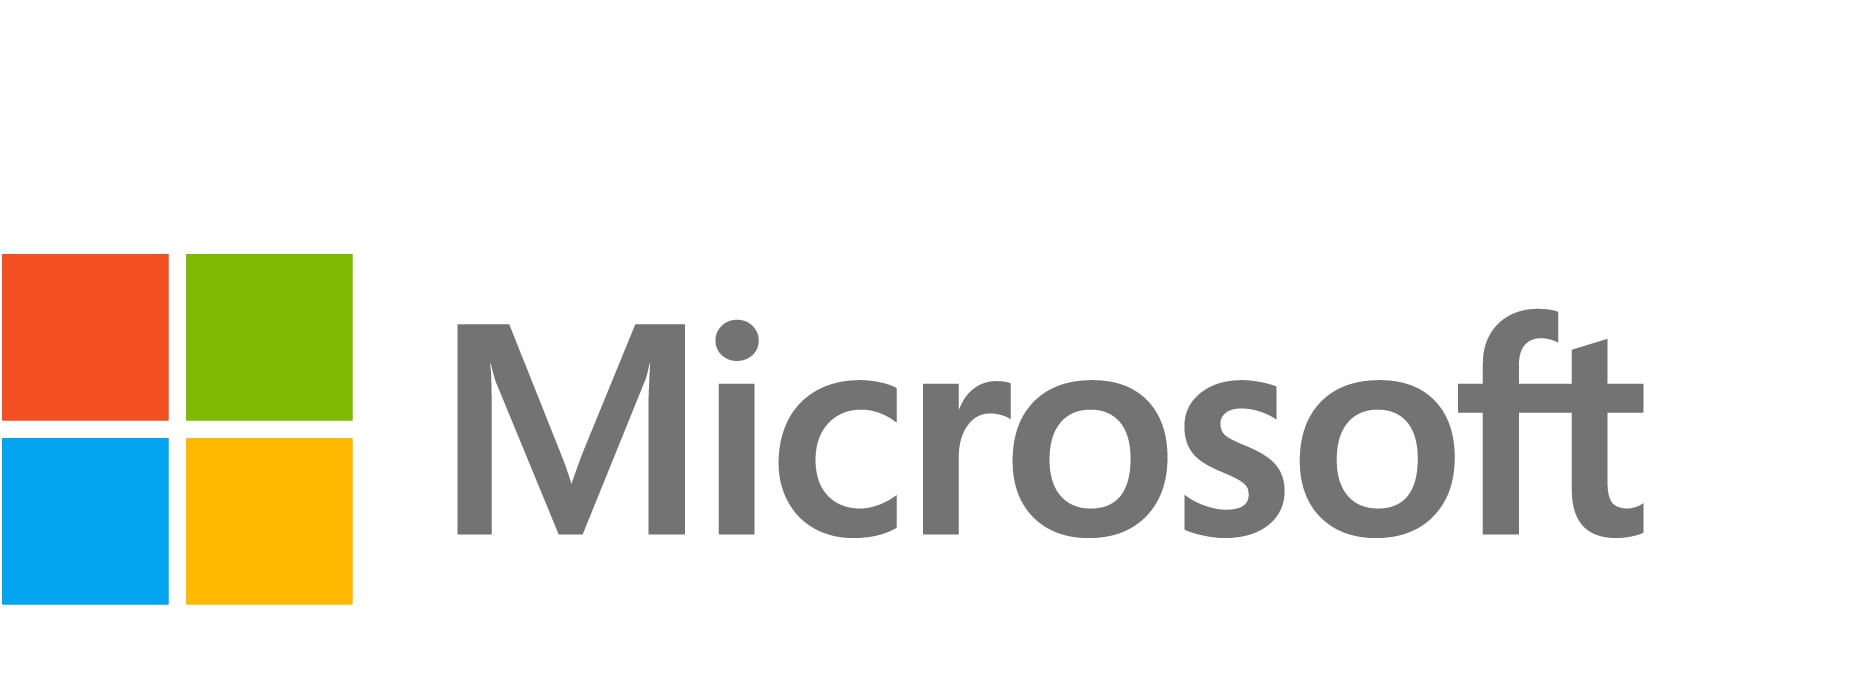 Microsoft Office LTSC Professional Plus 2021 - license - 1 PC